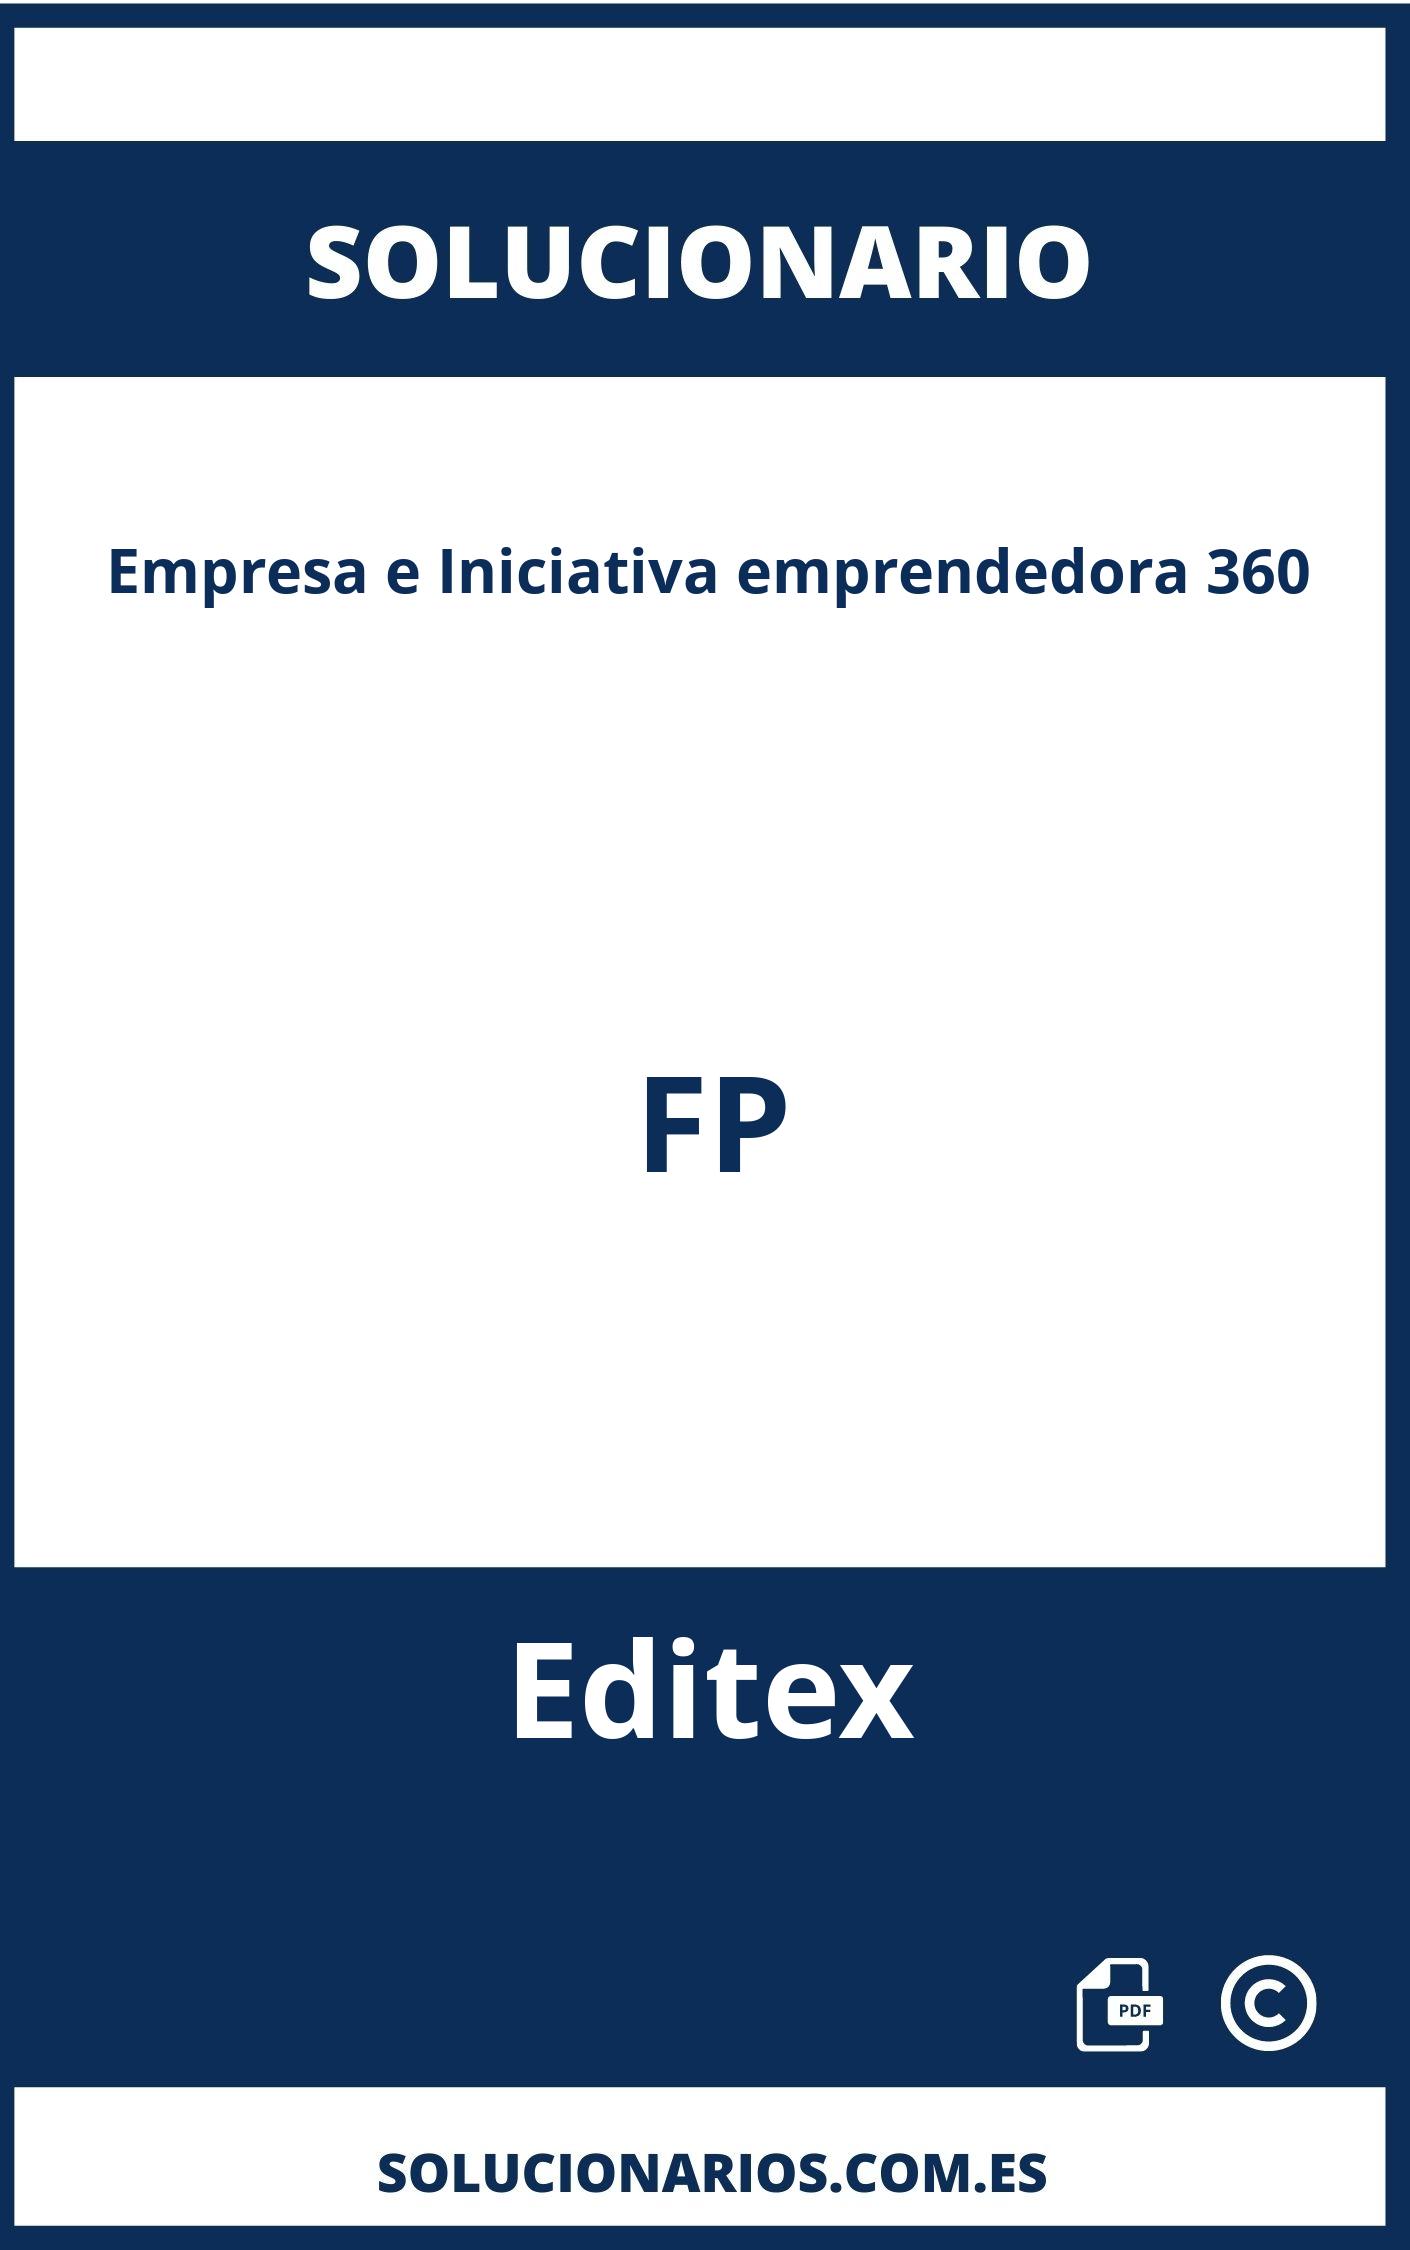 Solucionario Empresa e Iniciativa emprendedora 360 FP Editex